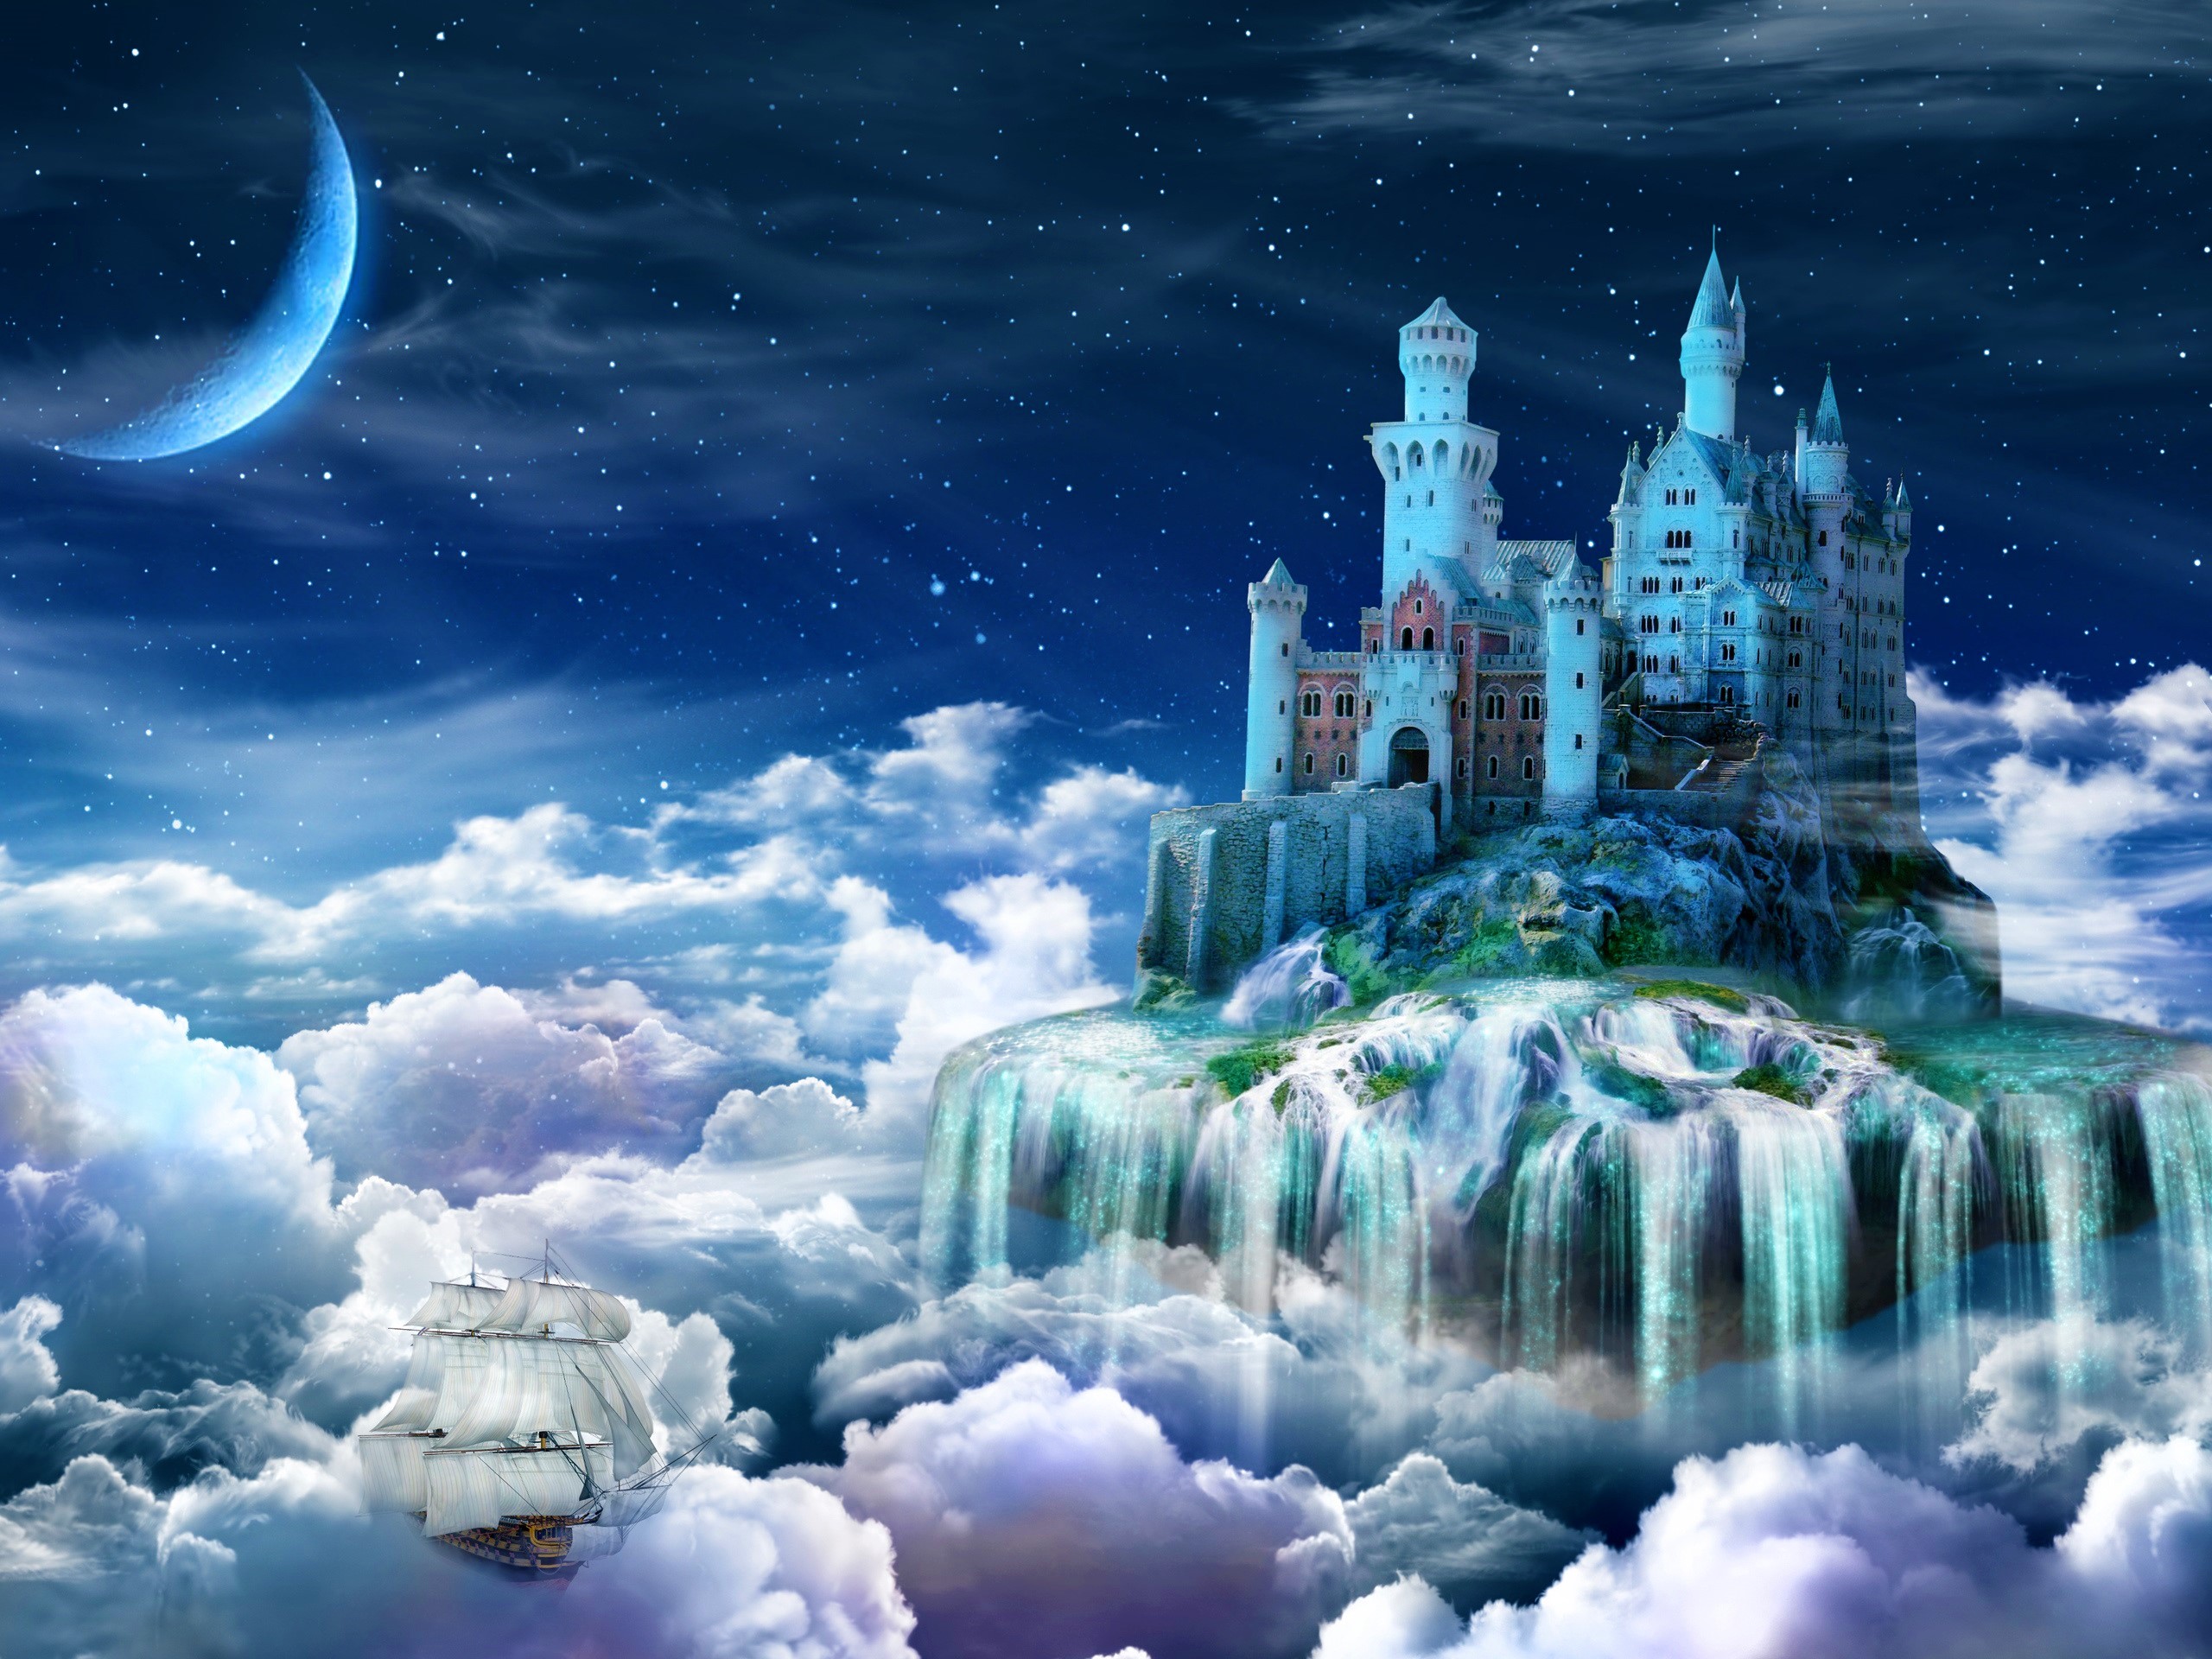 castle fantasia 3 english patch